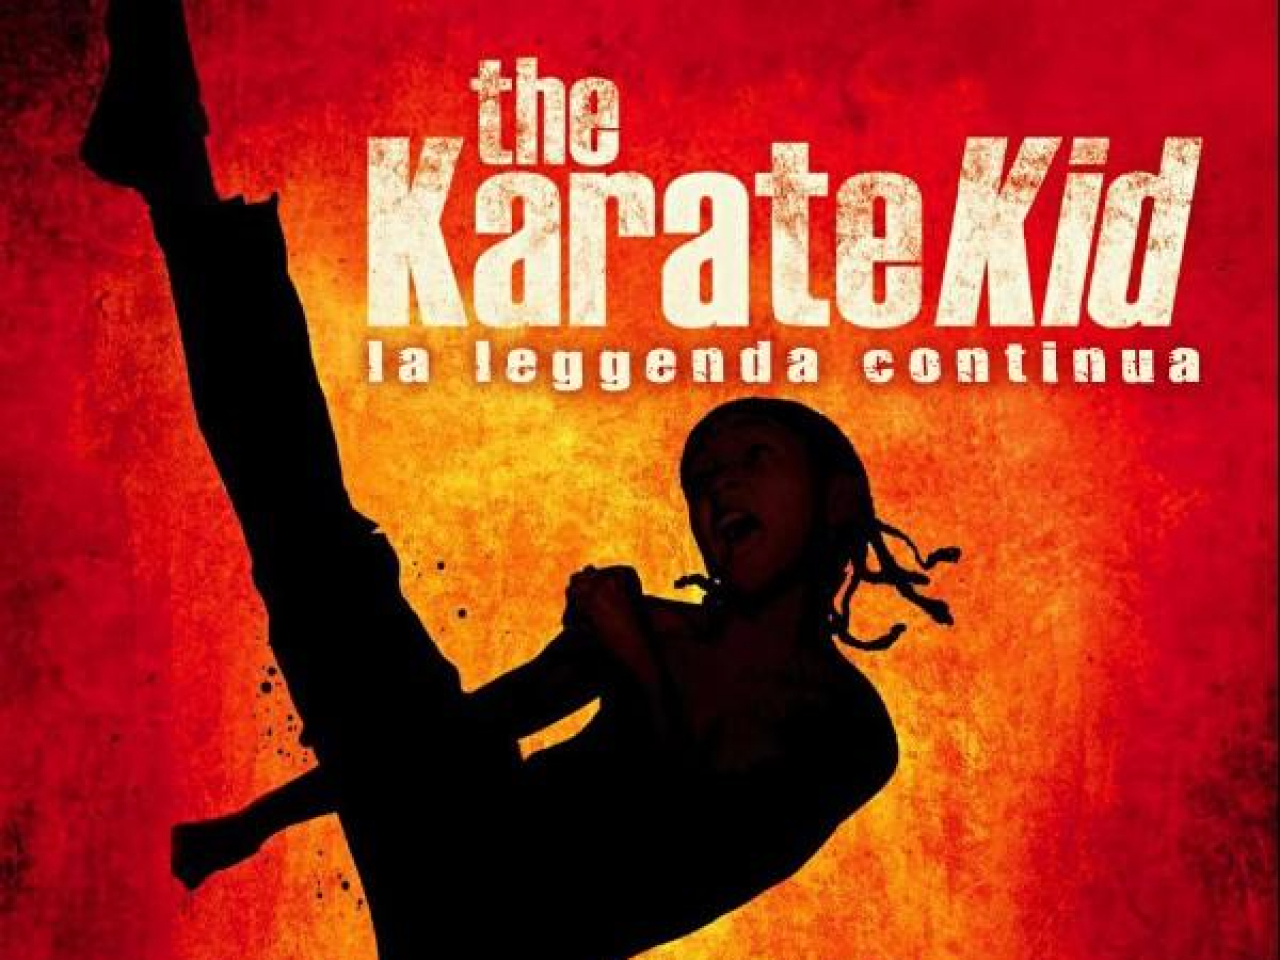 Karate Kid - La Leggenda Continua